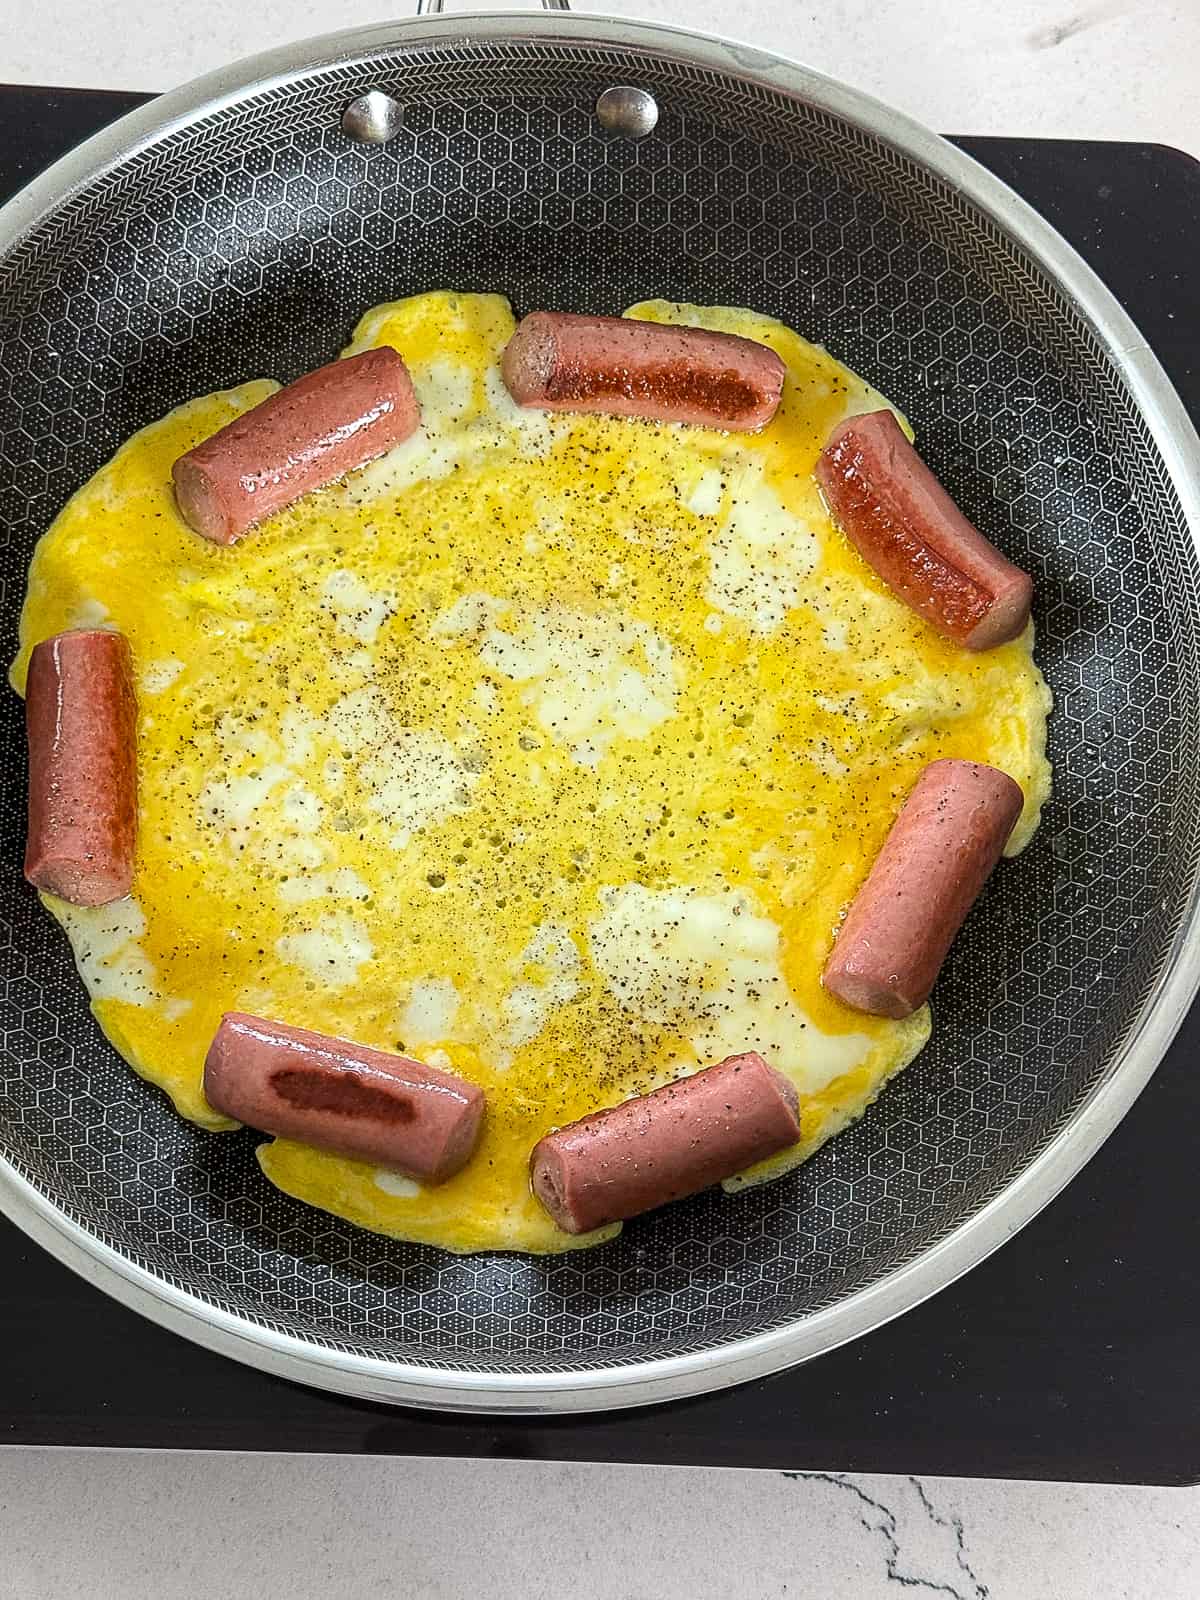 Cooking Little Wiener Hot Dogs and Eggs in hexclad pan